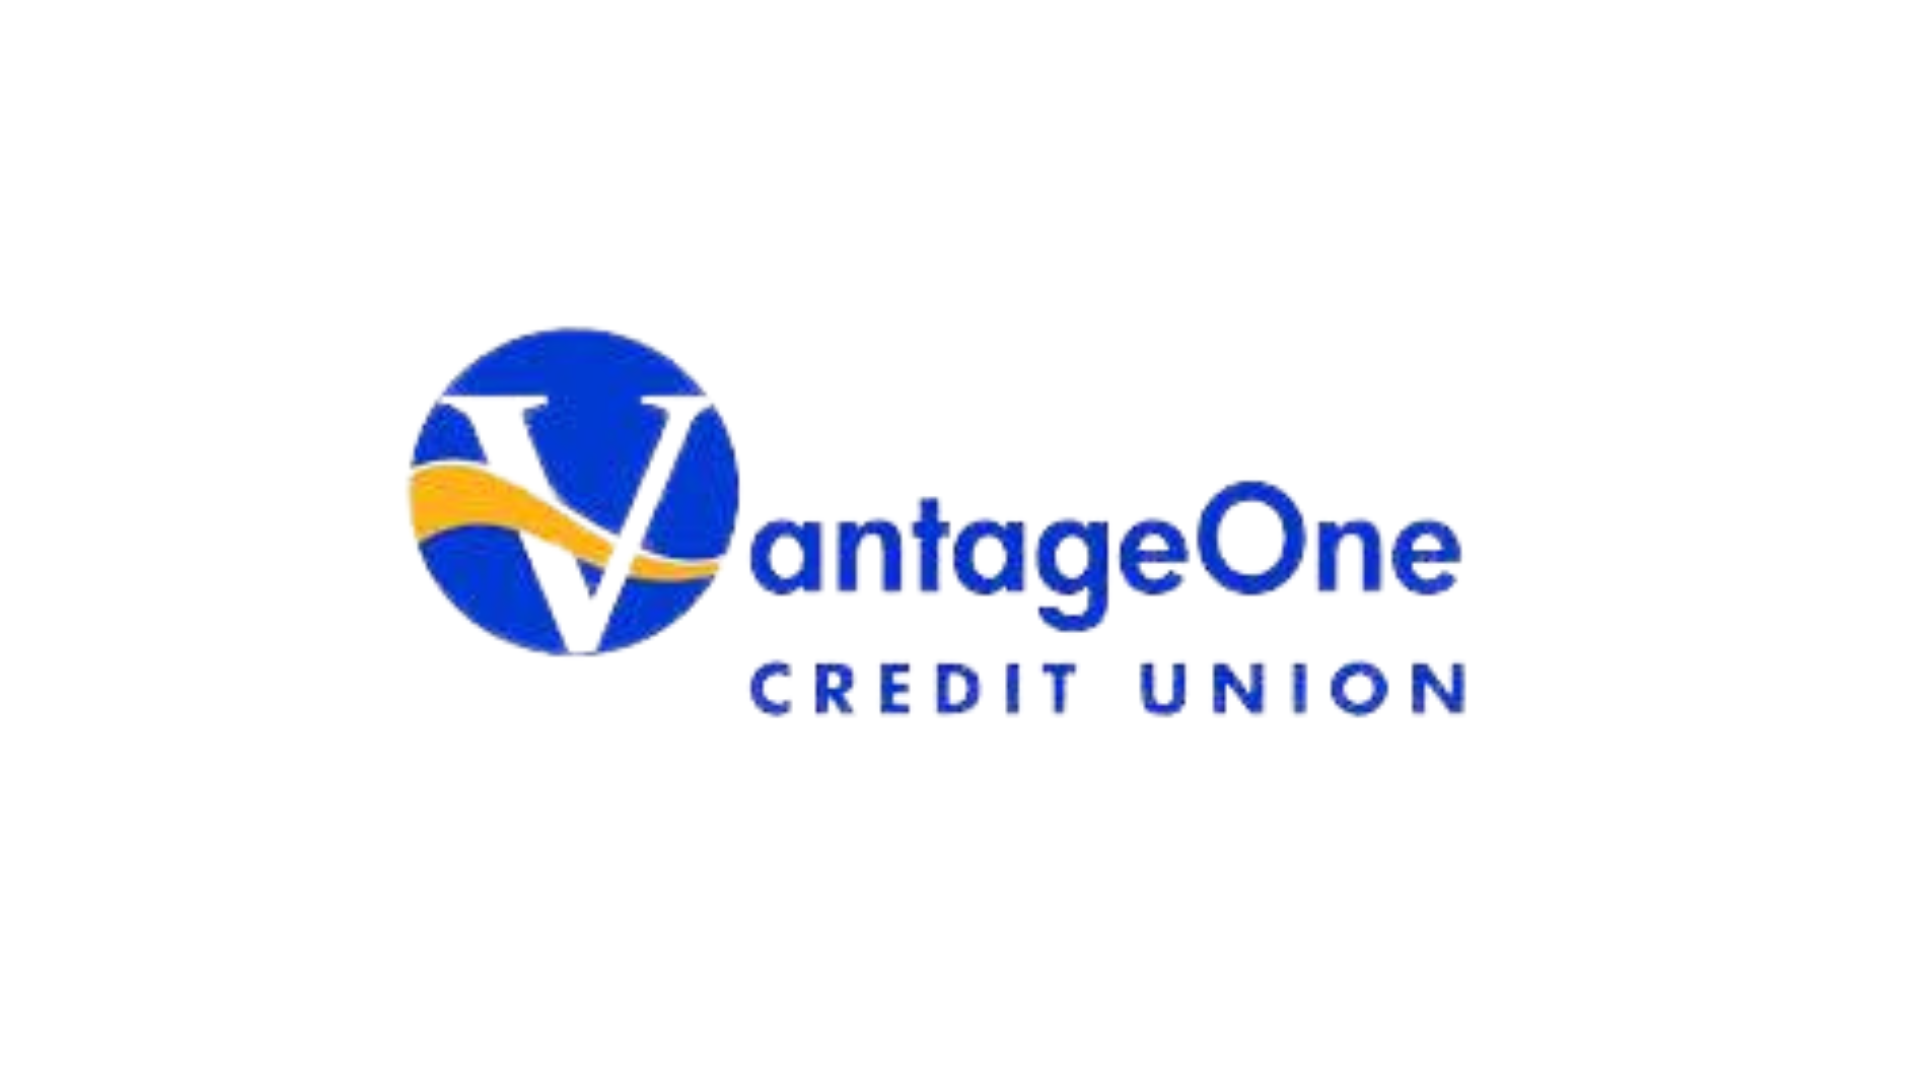 VantageOne Credit Union logo